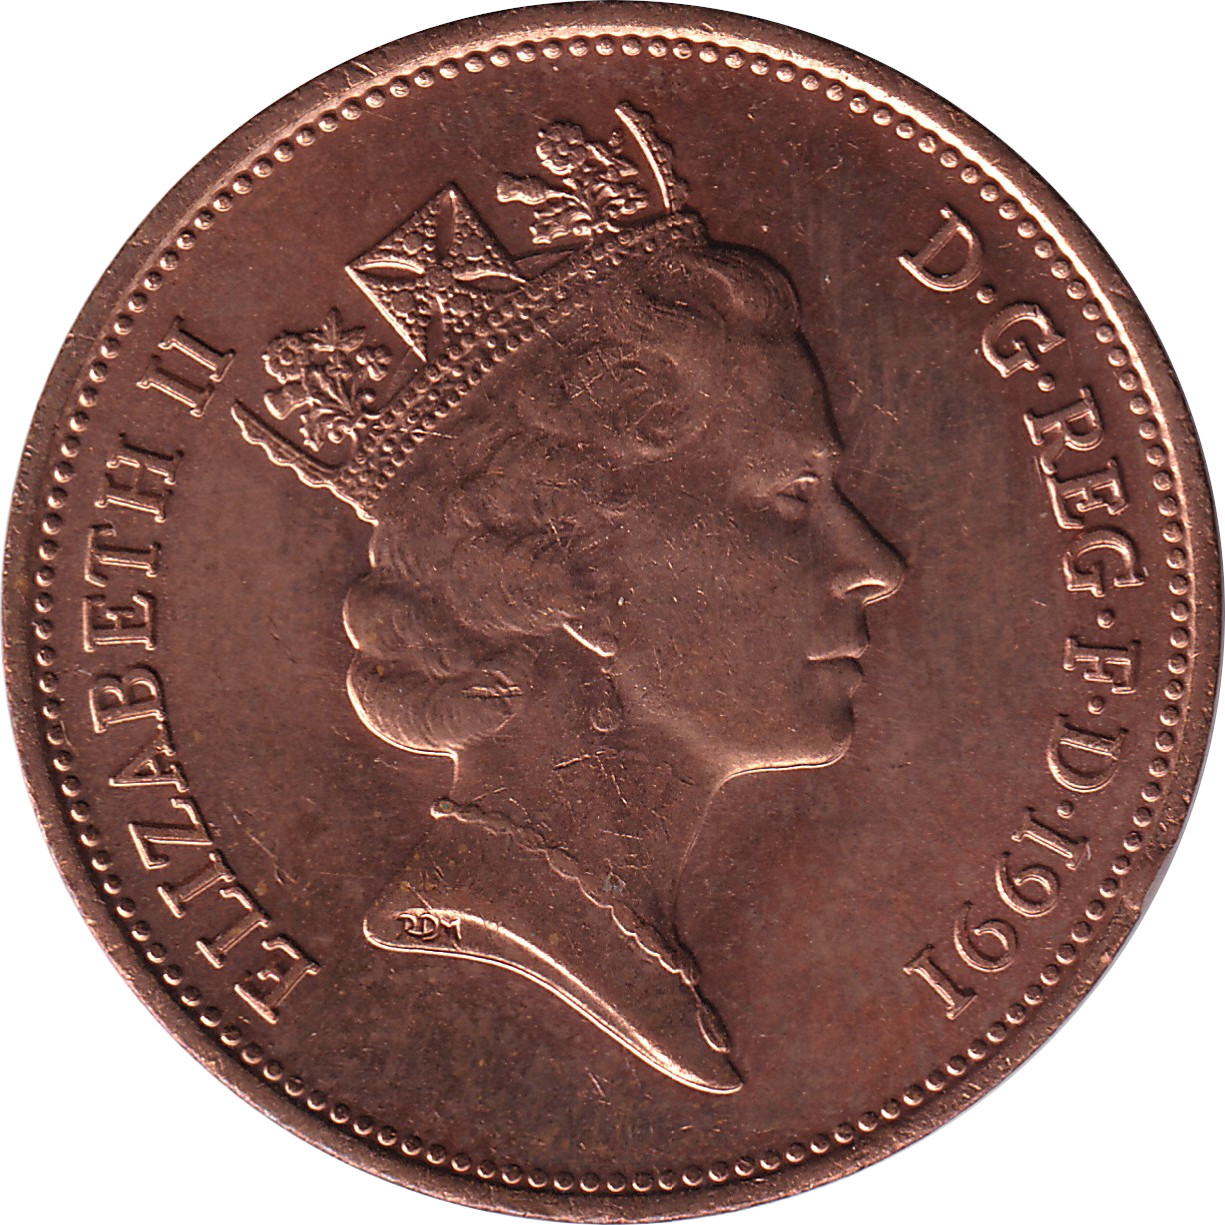 2 pence - Elizabeth II - Tête mature